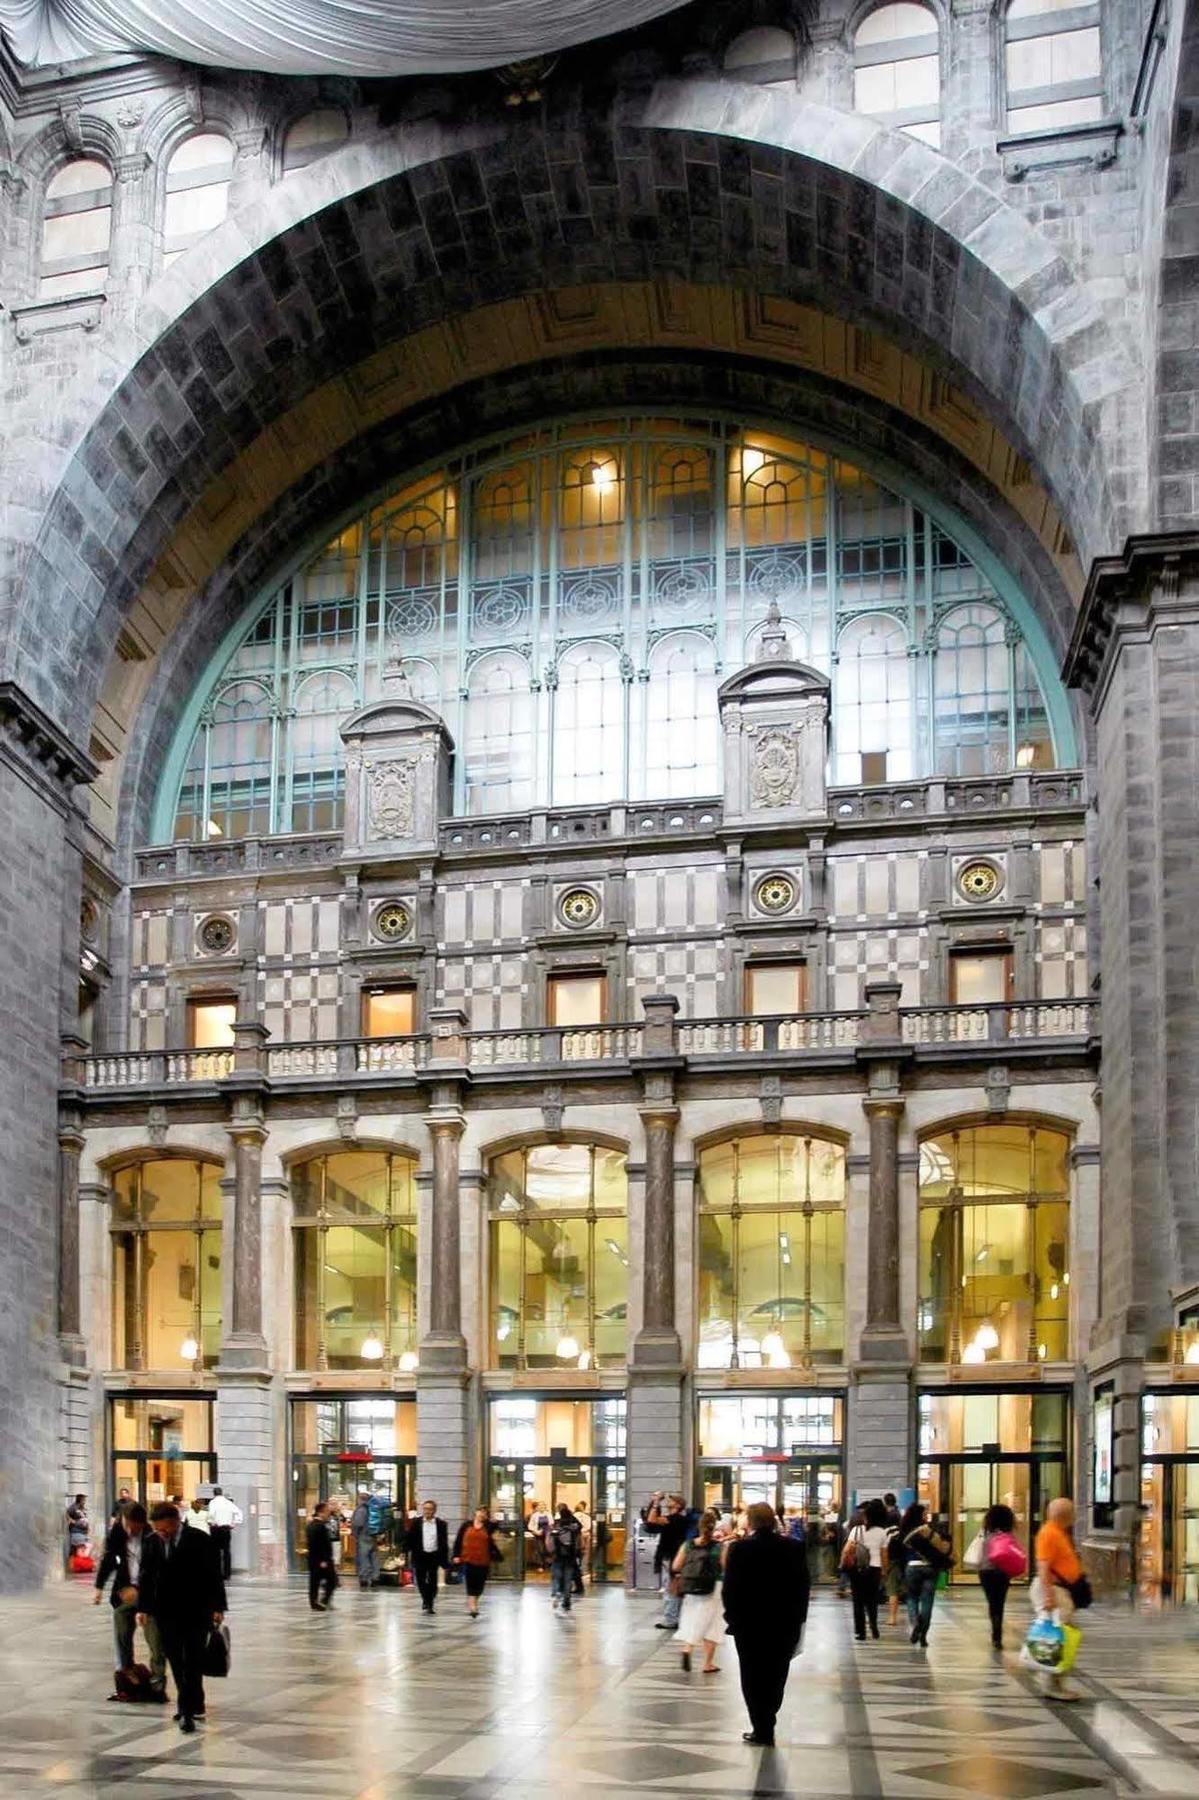 Ibis Budget Antwerpen Centraal Station Exterior foto